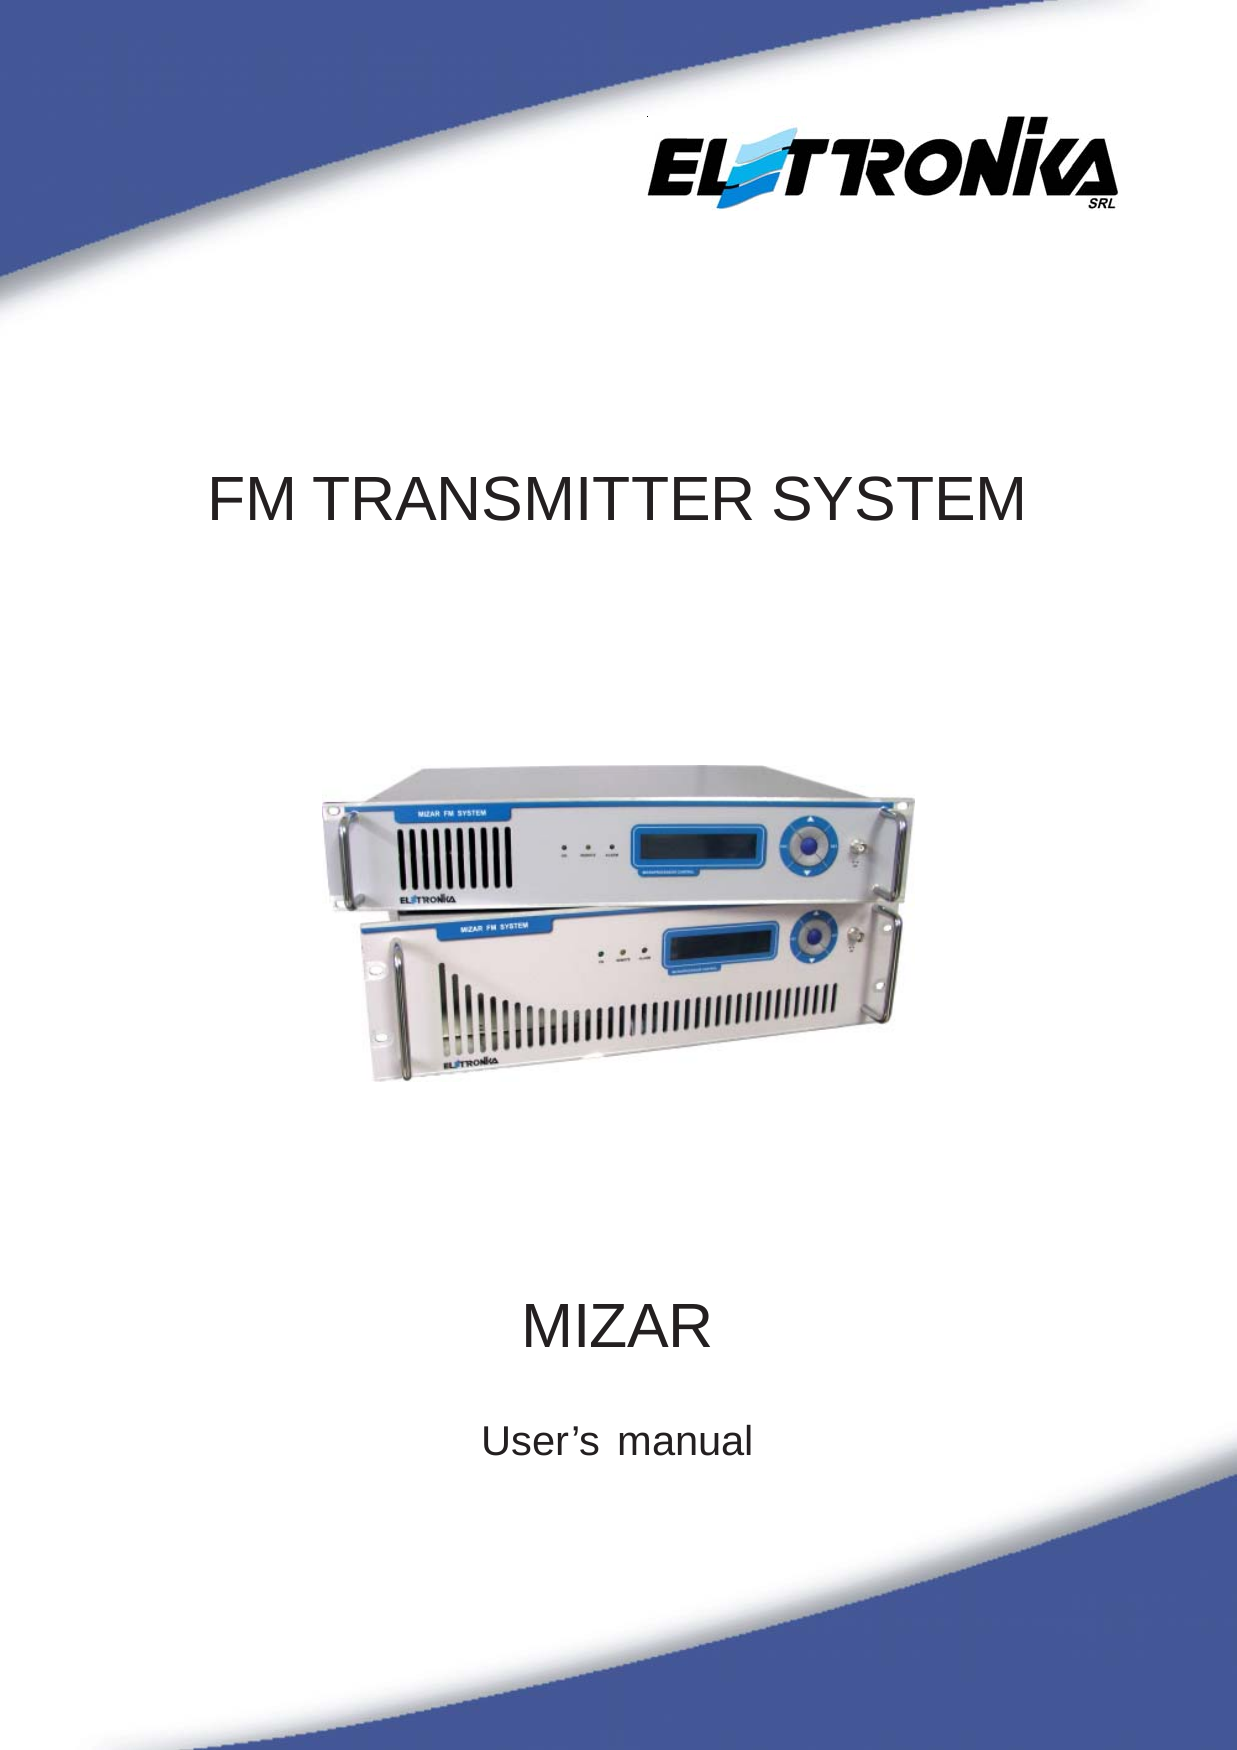 15FM TRANSMITTER SYSTEMMIZARUser’s manual